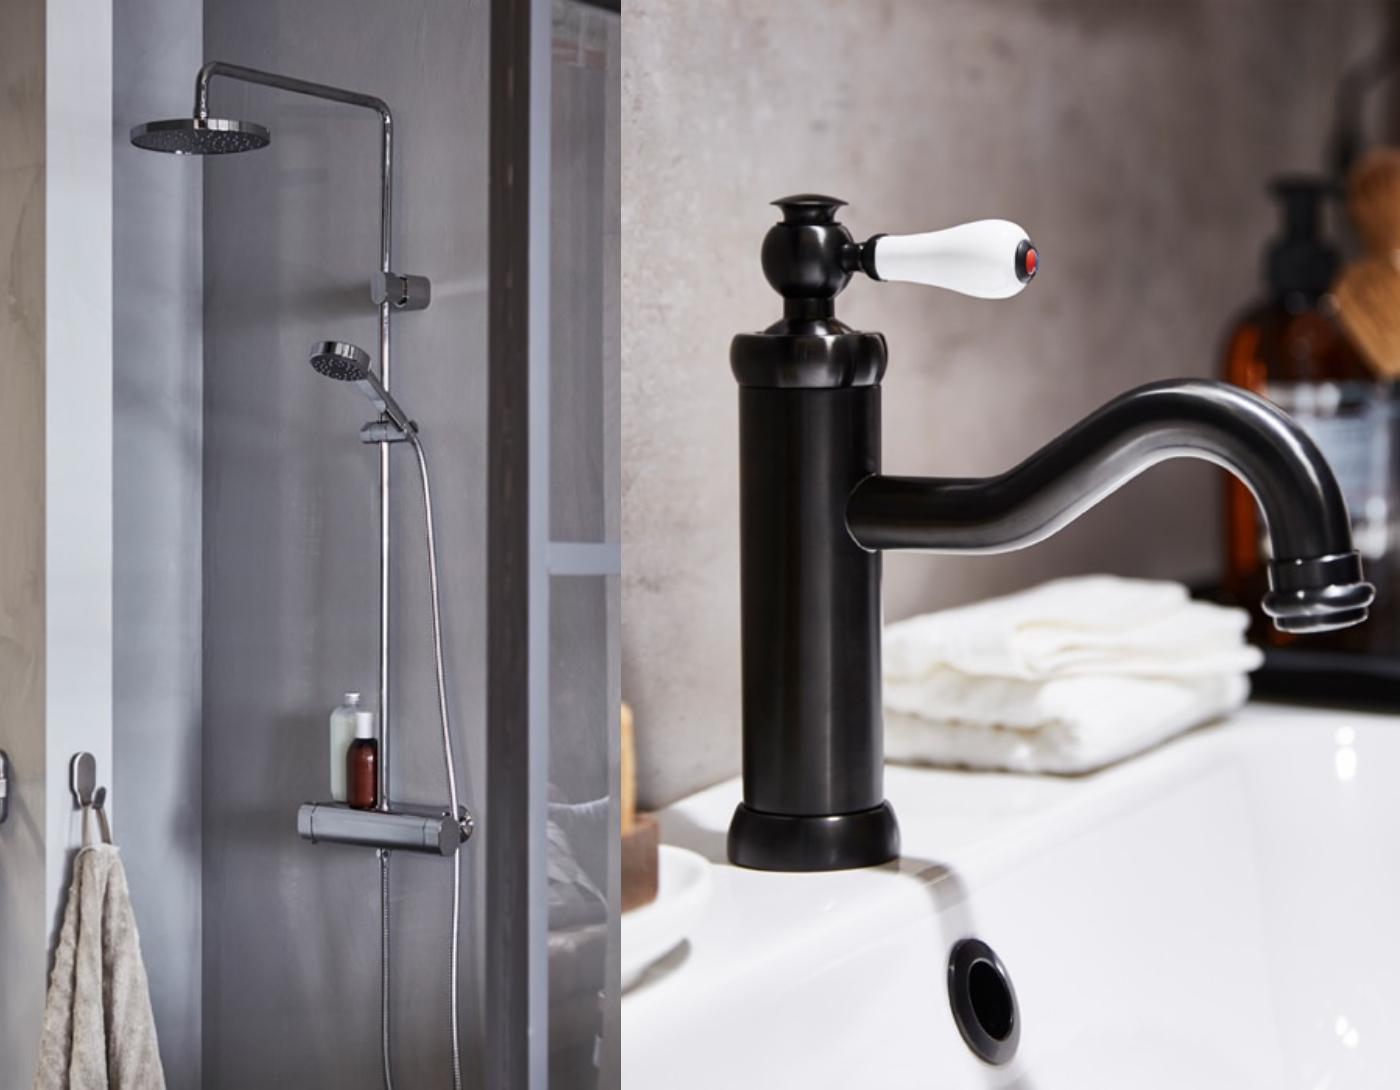 Ikea bathroom ideas eco-friendly water saving tips tips water faucet bathroom fittings shower